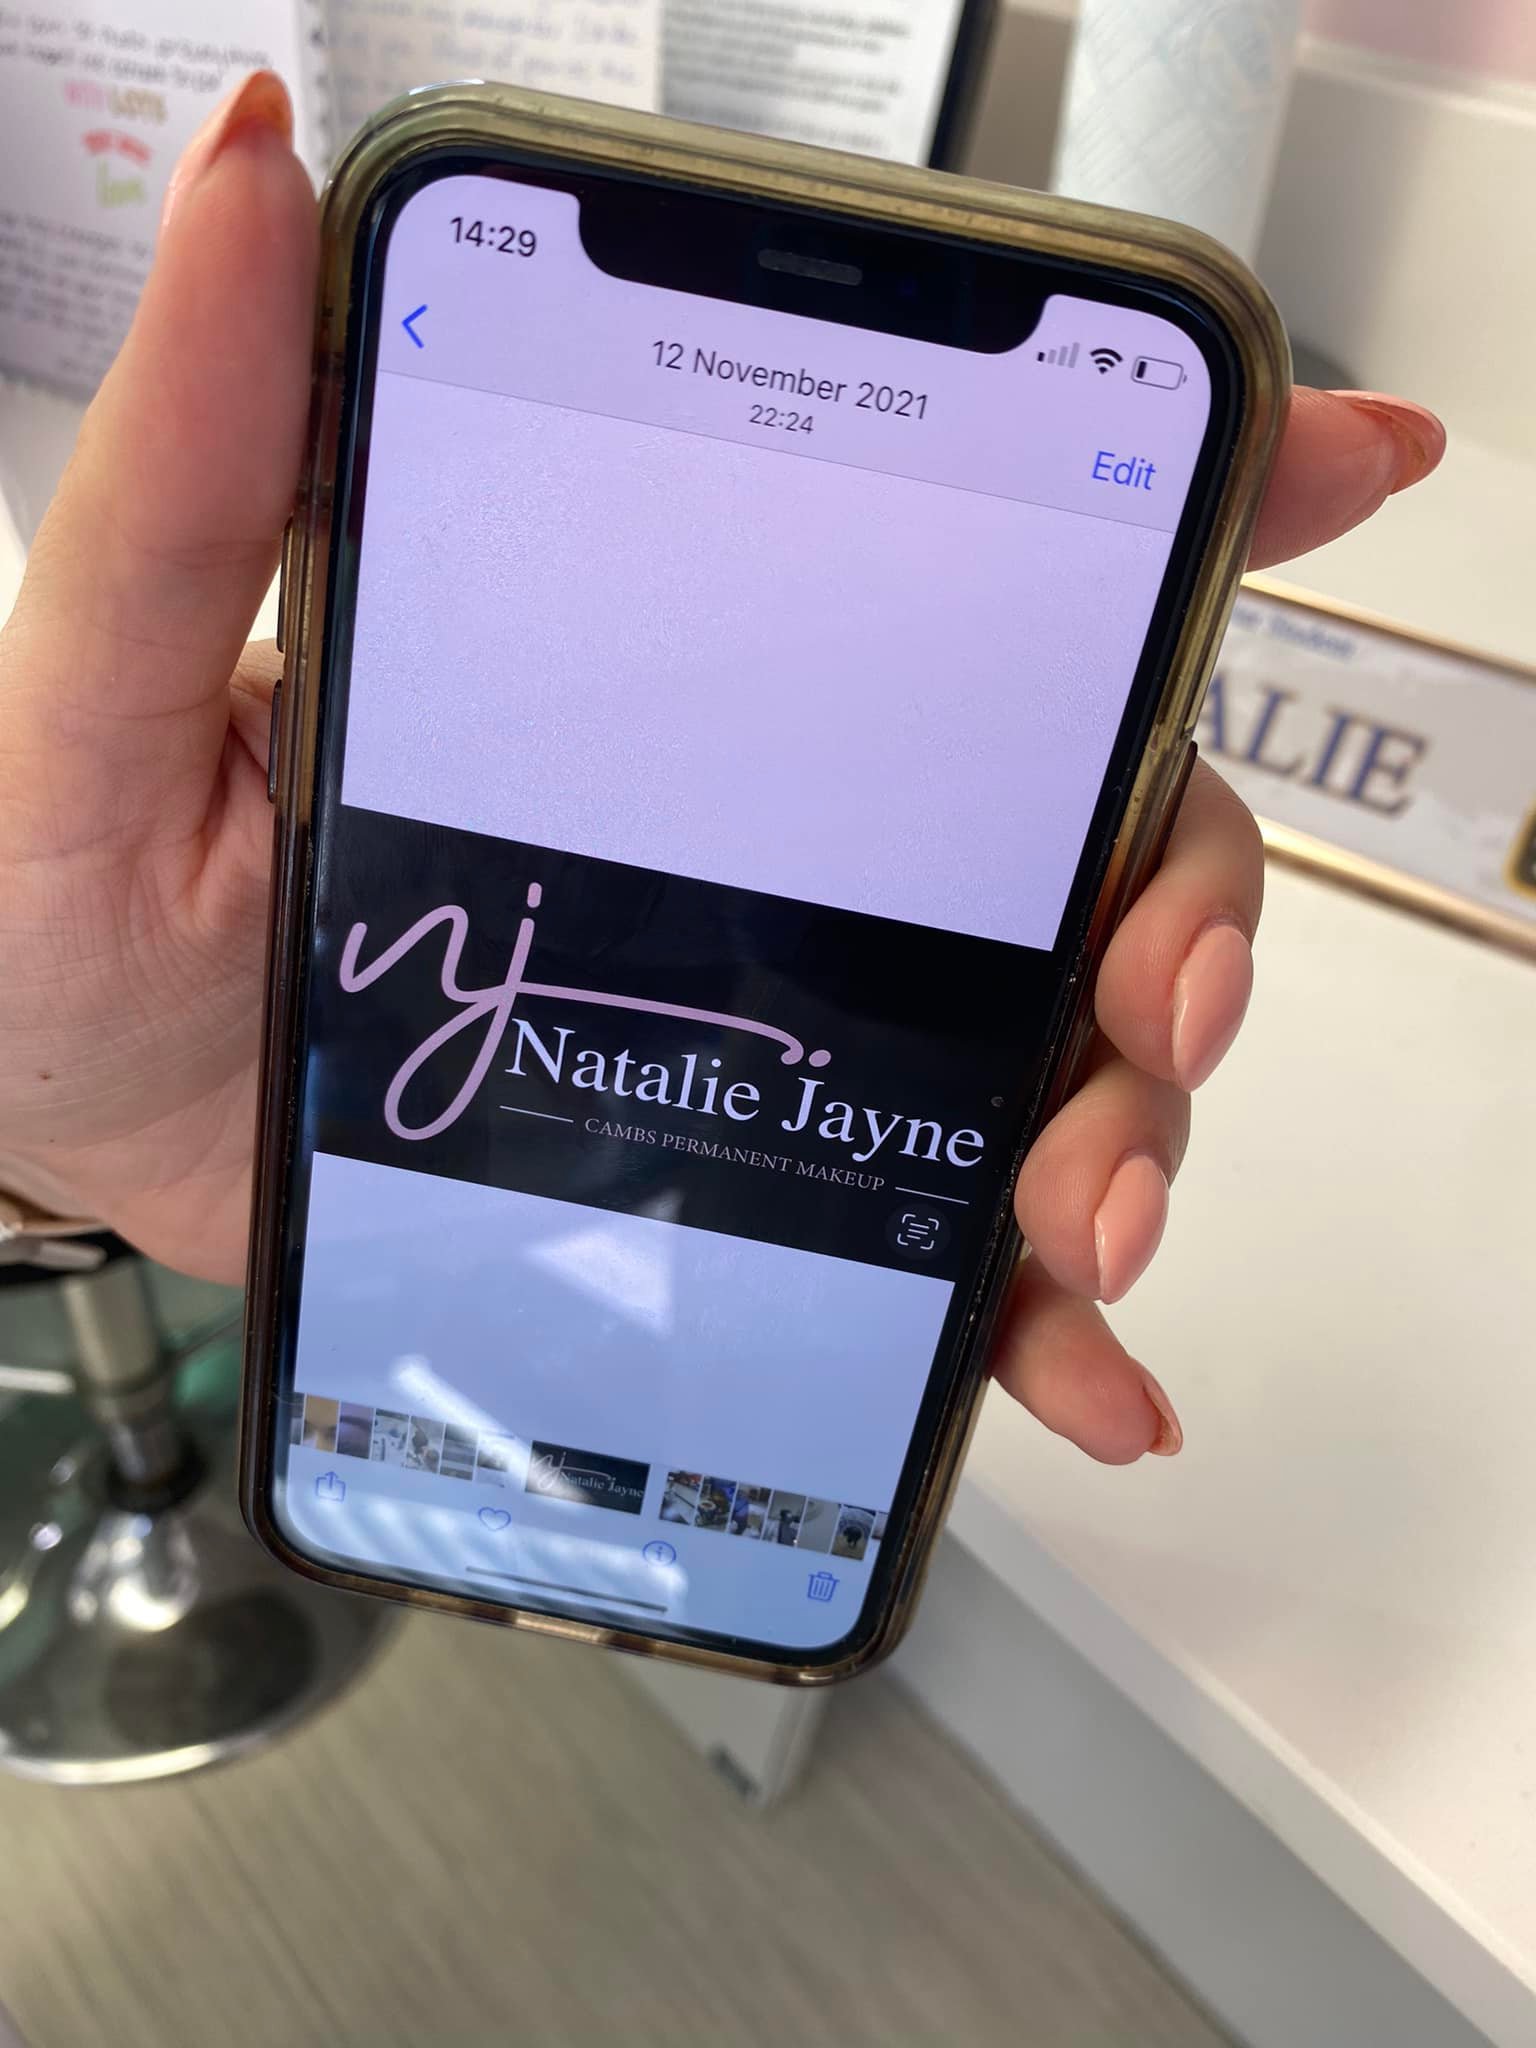 Natalie's new permanent makeup business logo